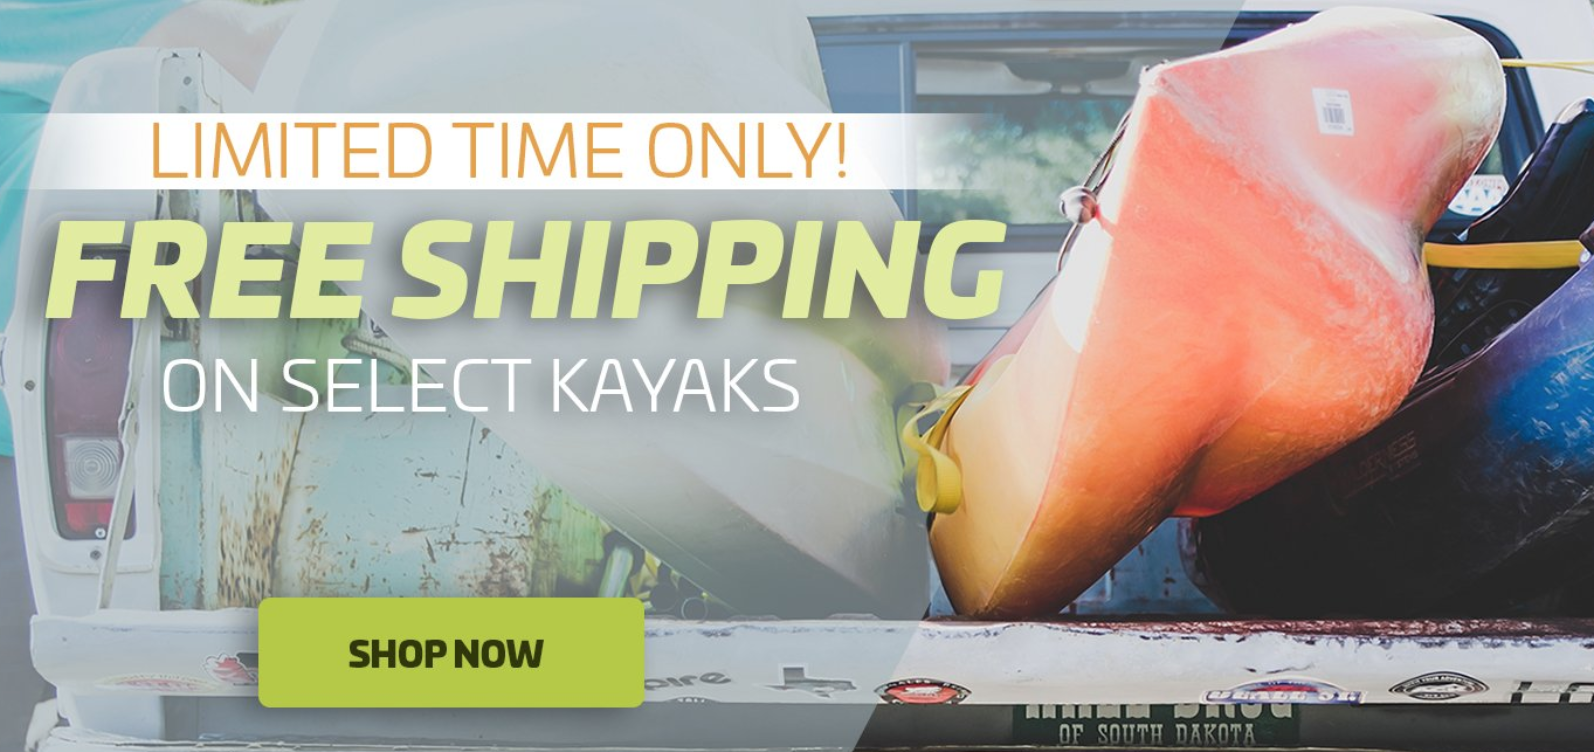 Free Shipping on Select Kayaks